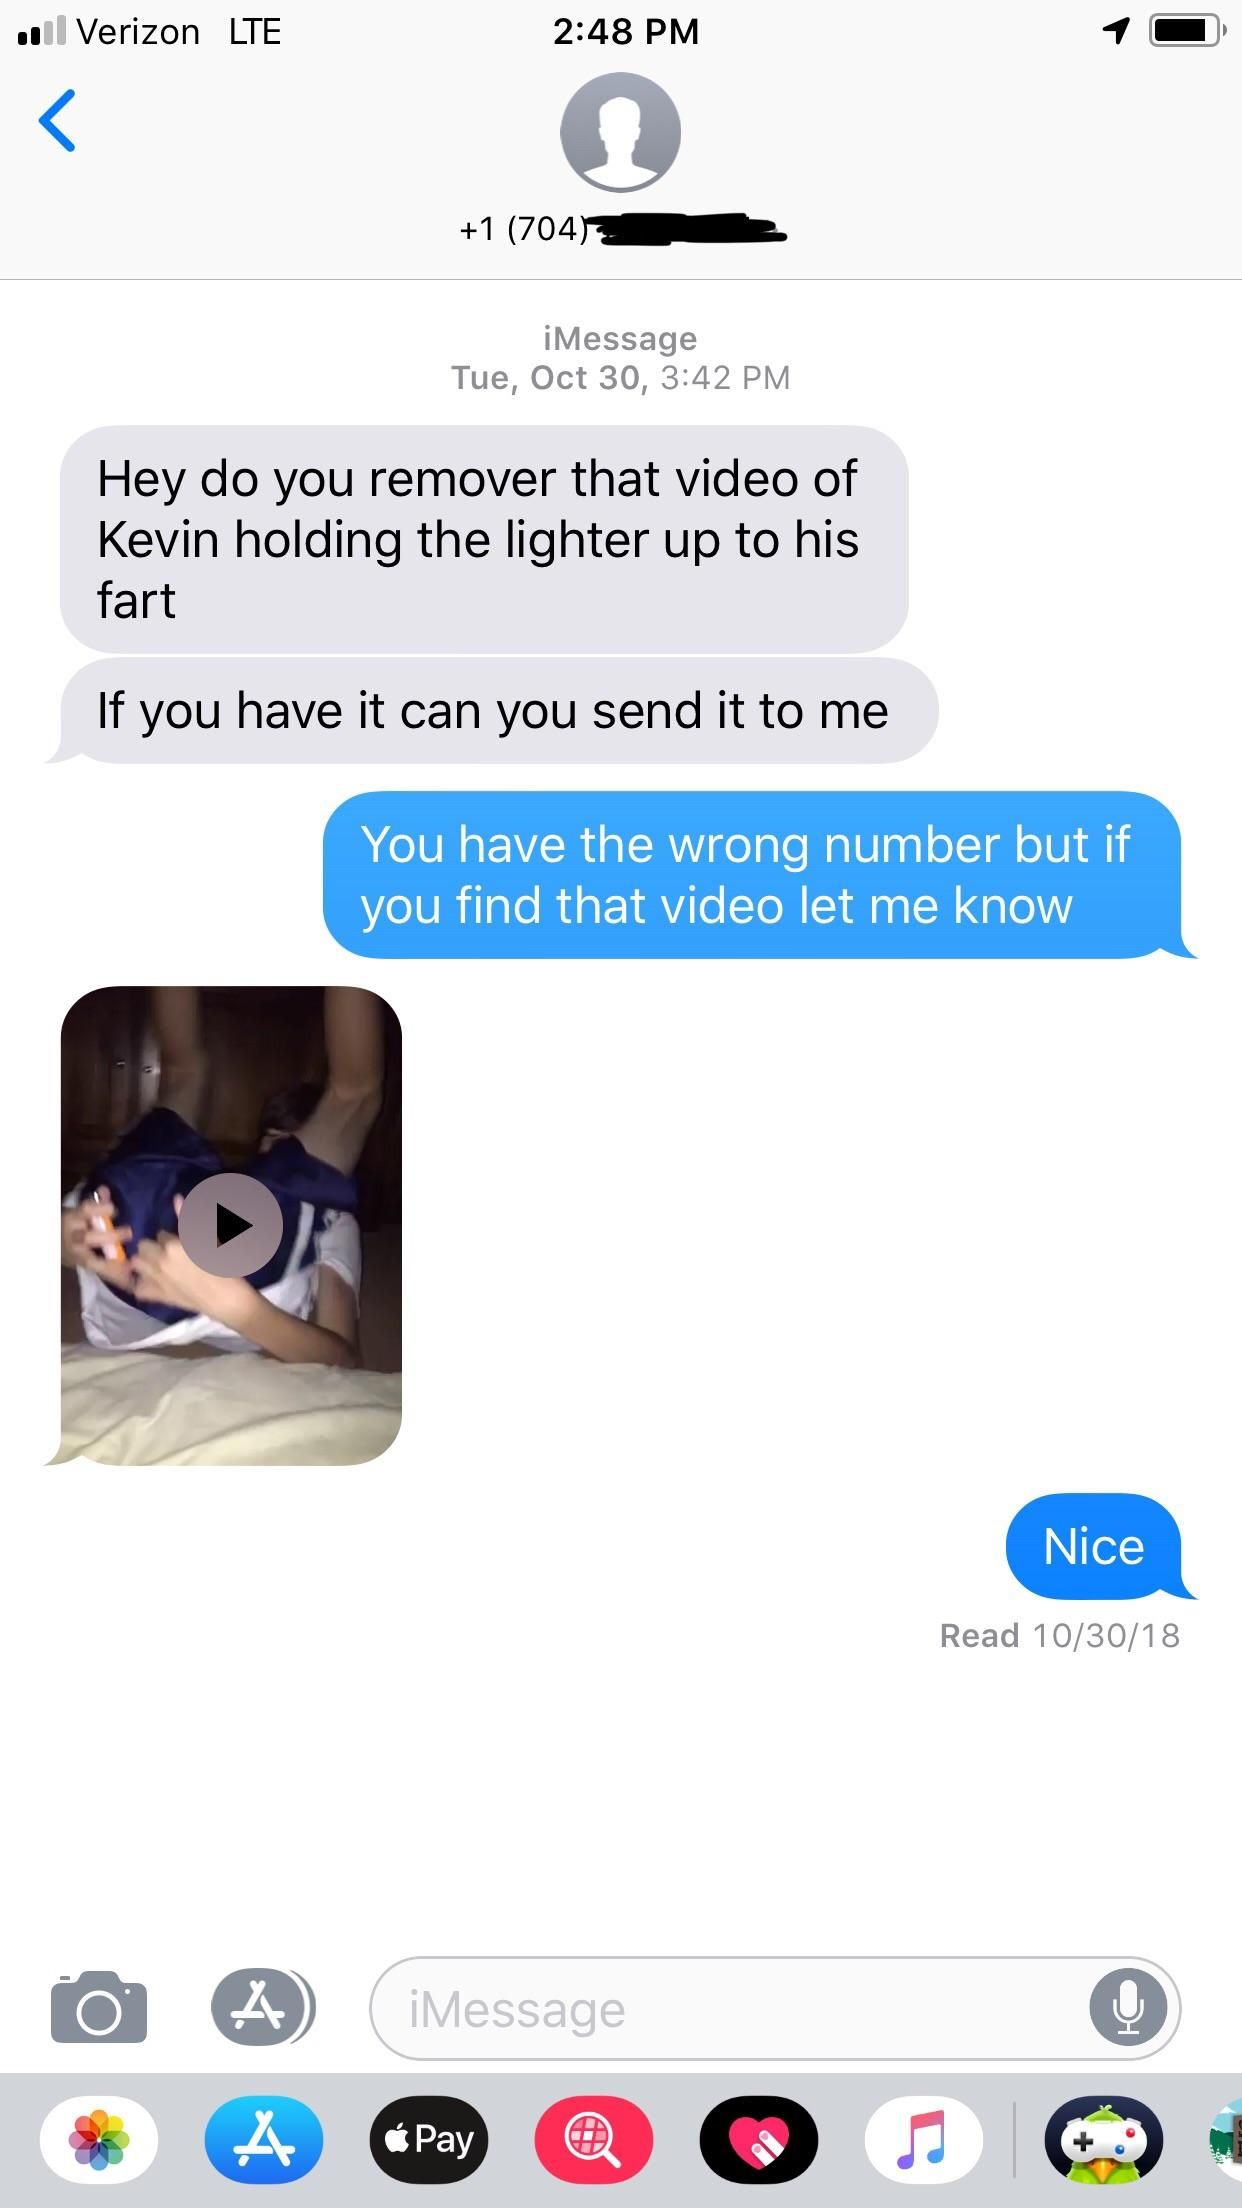 Friend got an interesting text a little while ago